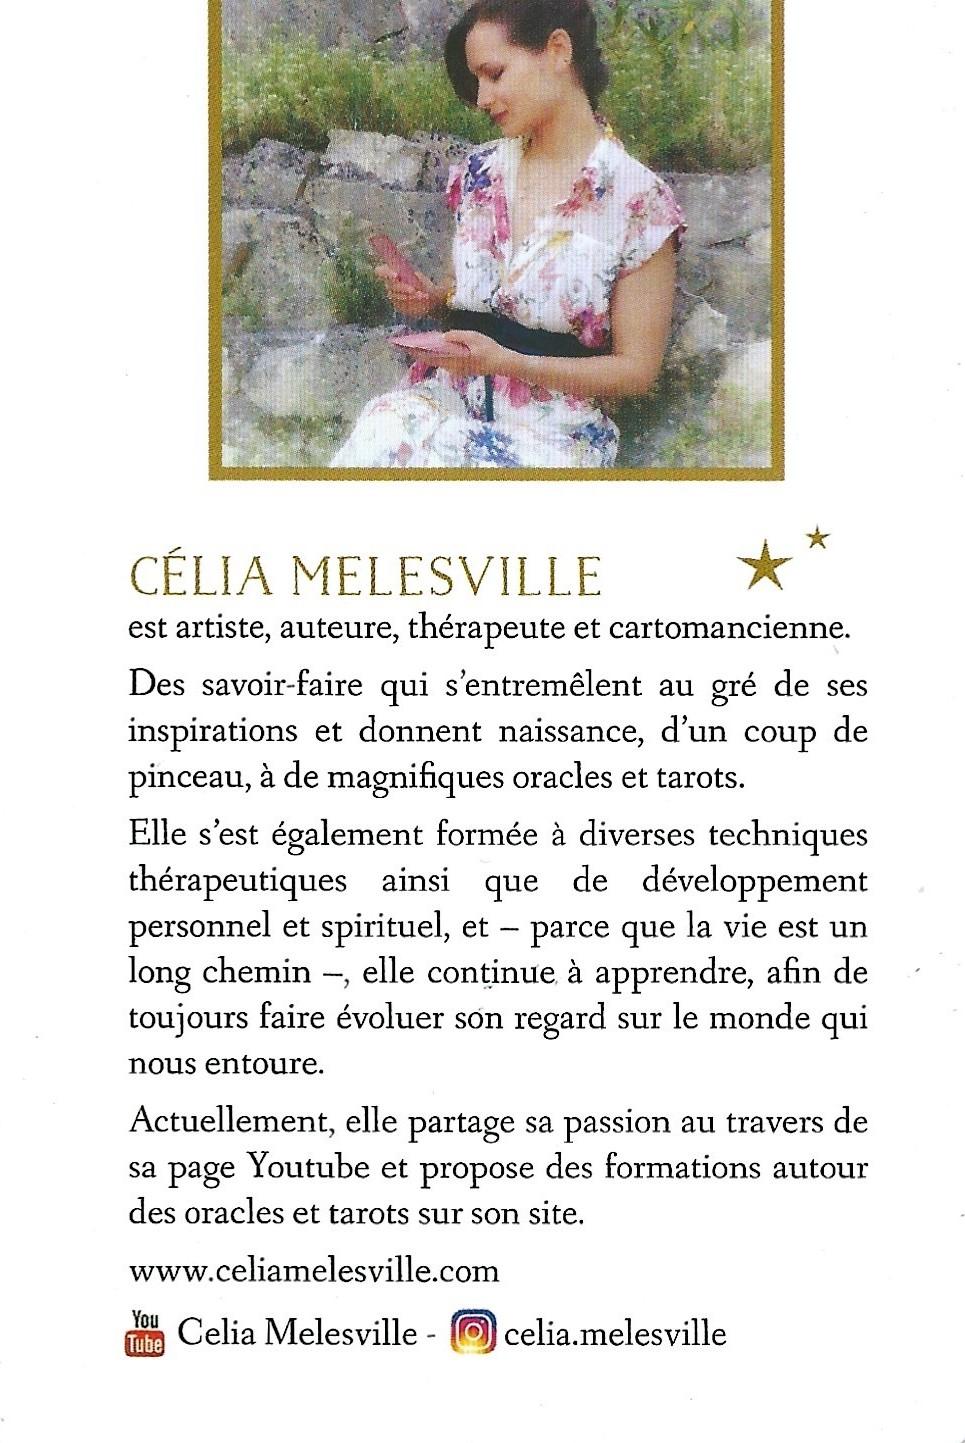 Celia melesville